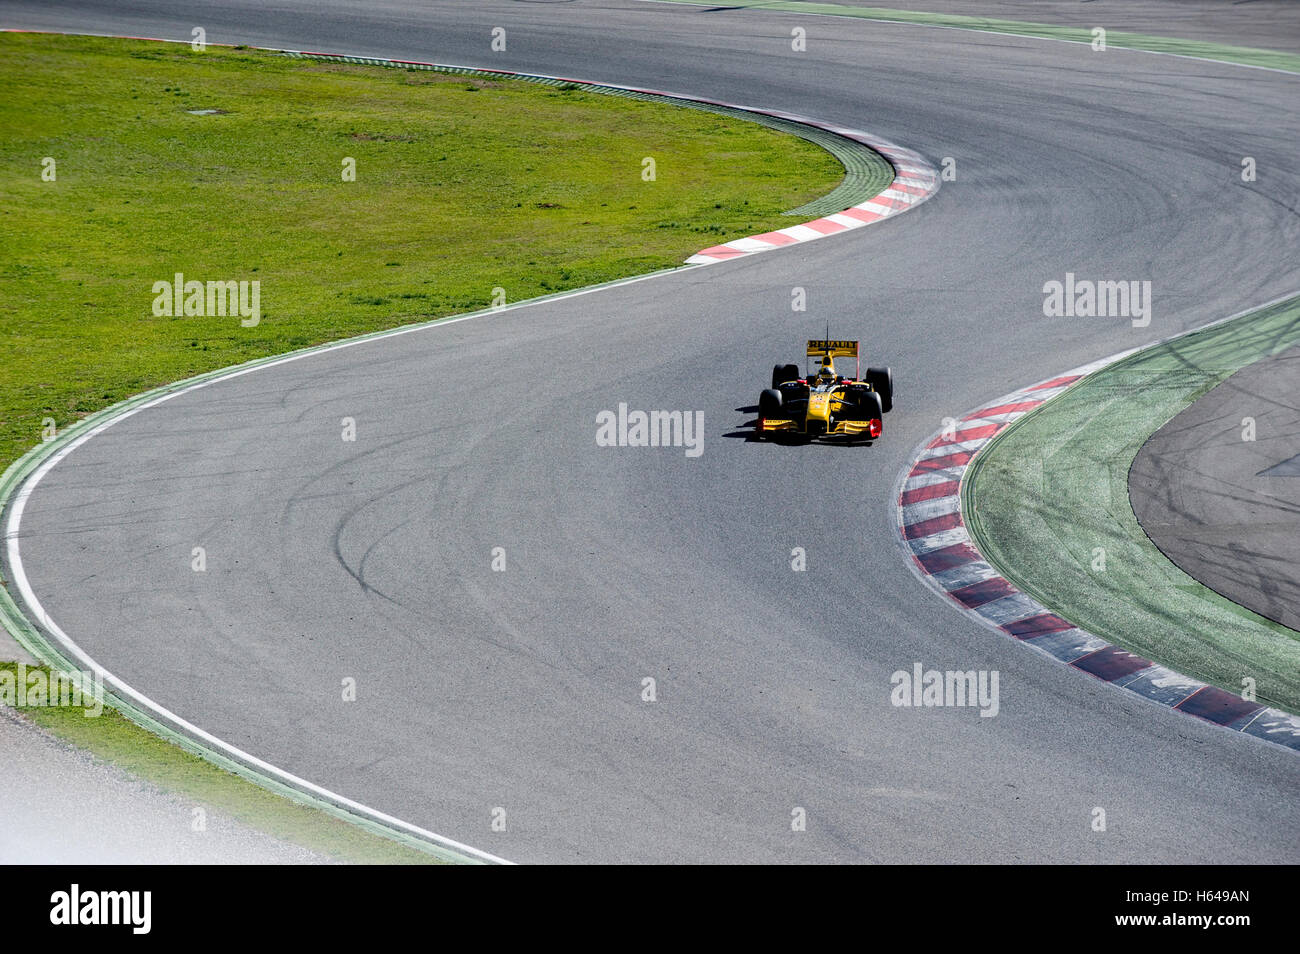 Motorsport, Robert Kubica, POL, in the Renault R30 race car, Formula 1 testing at the Circuit de Catalunya race track in Stock Photo